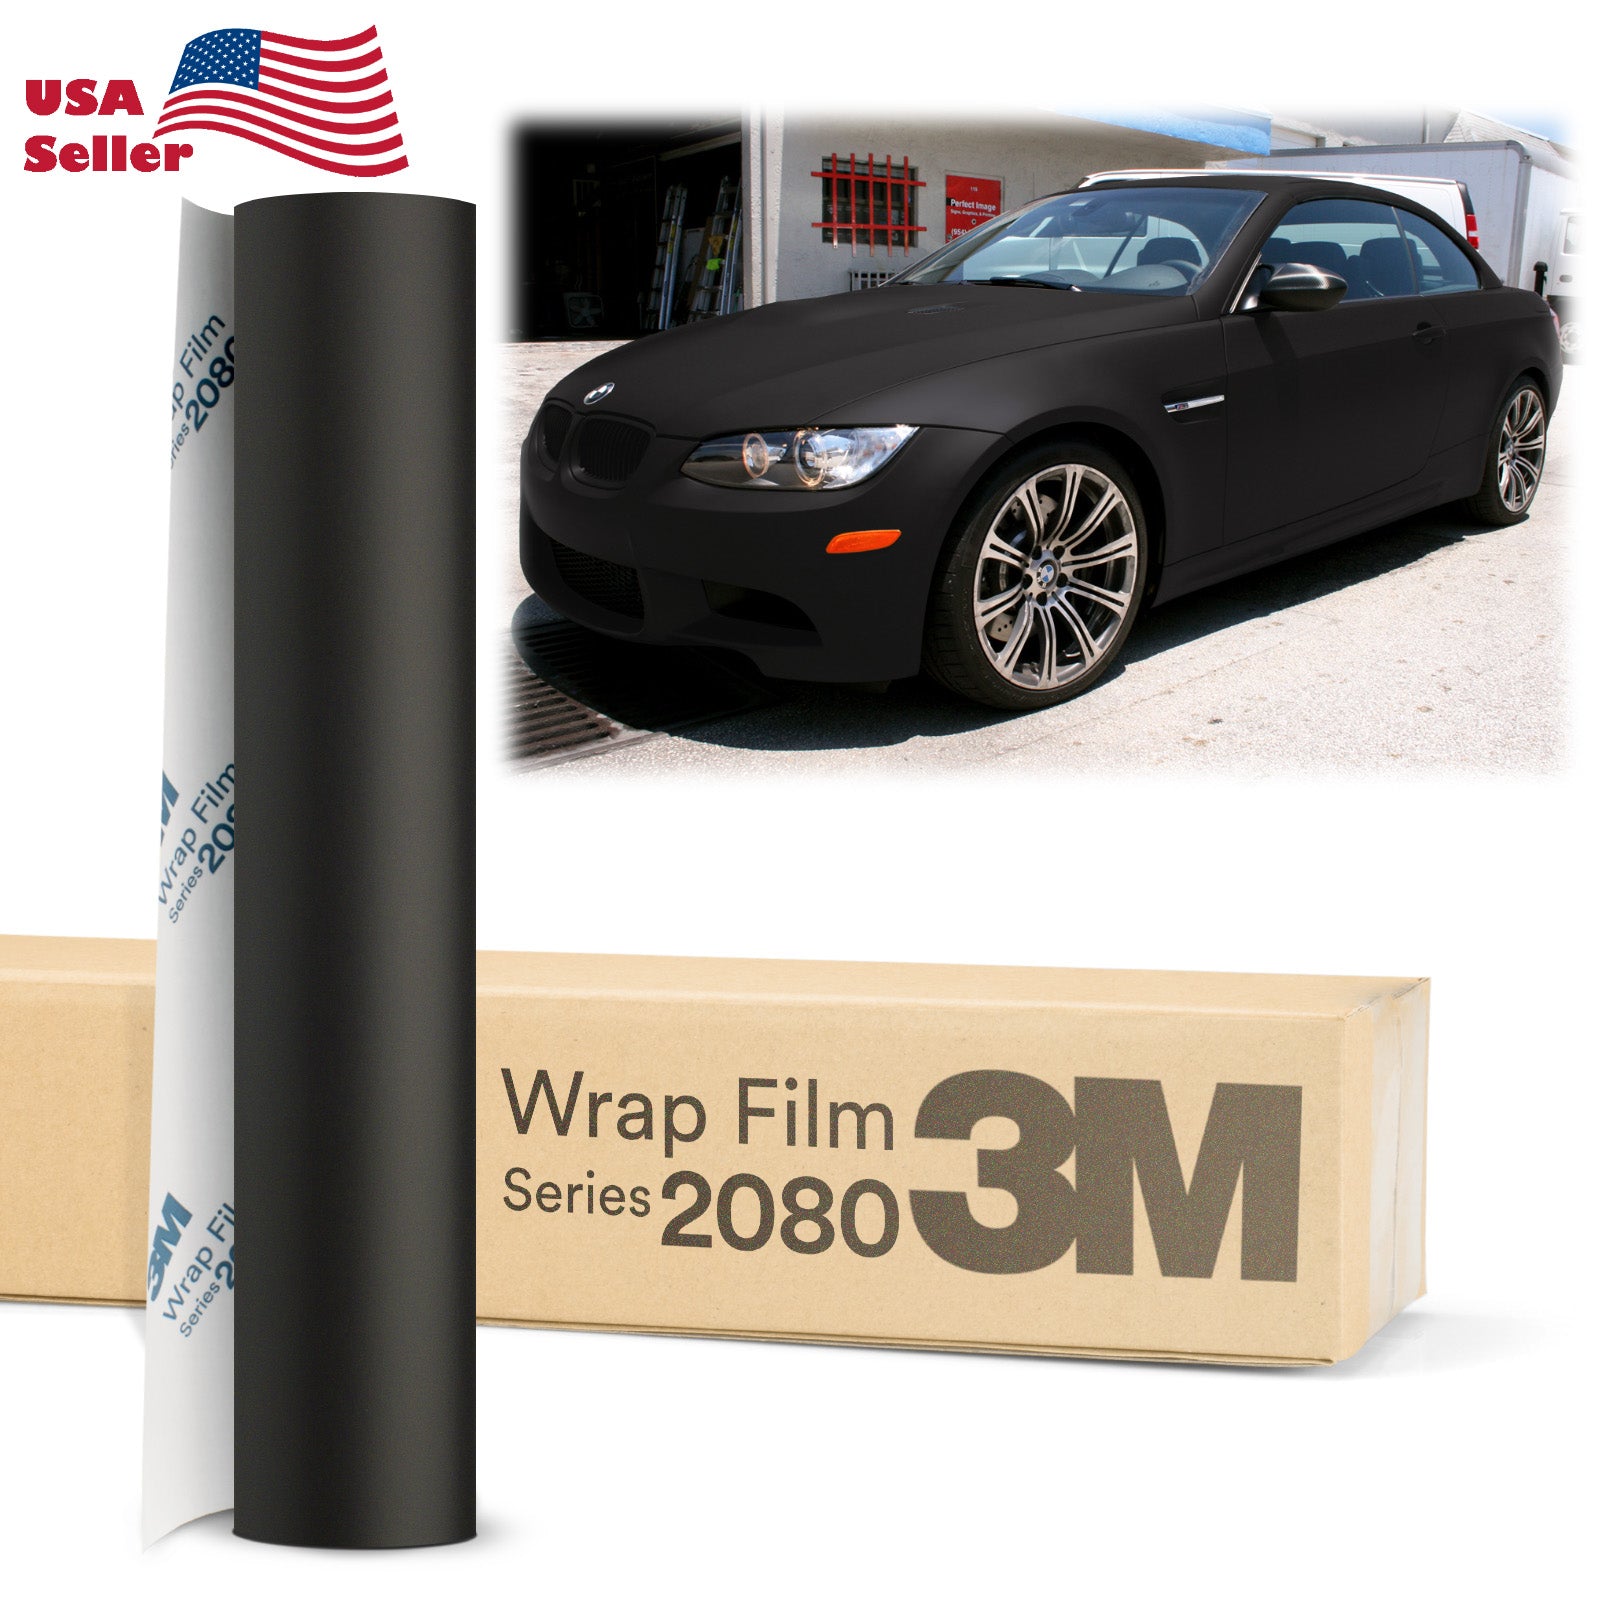 3M 2080 Wrap Film Series